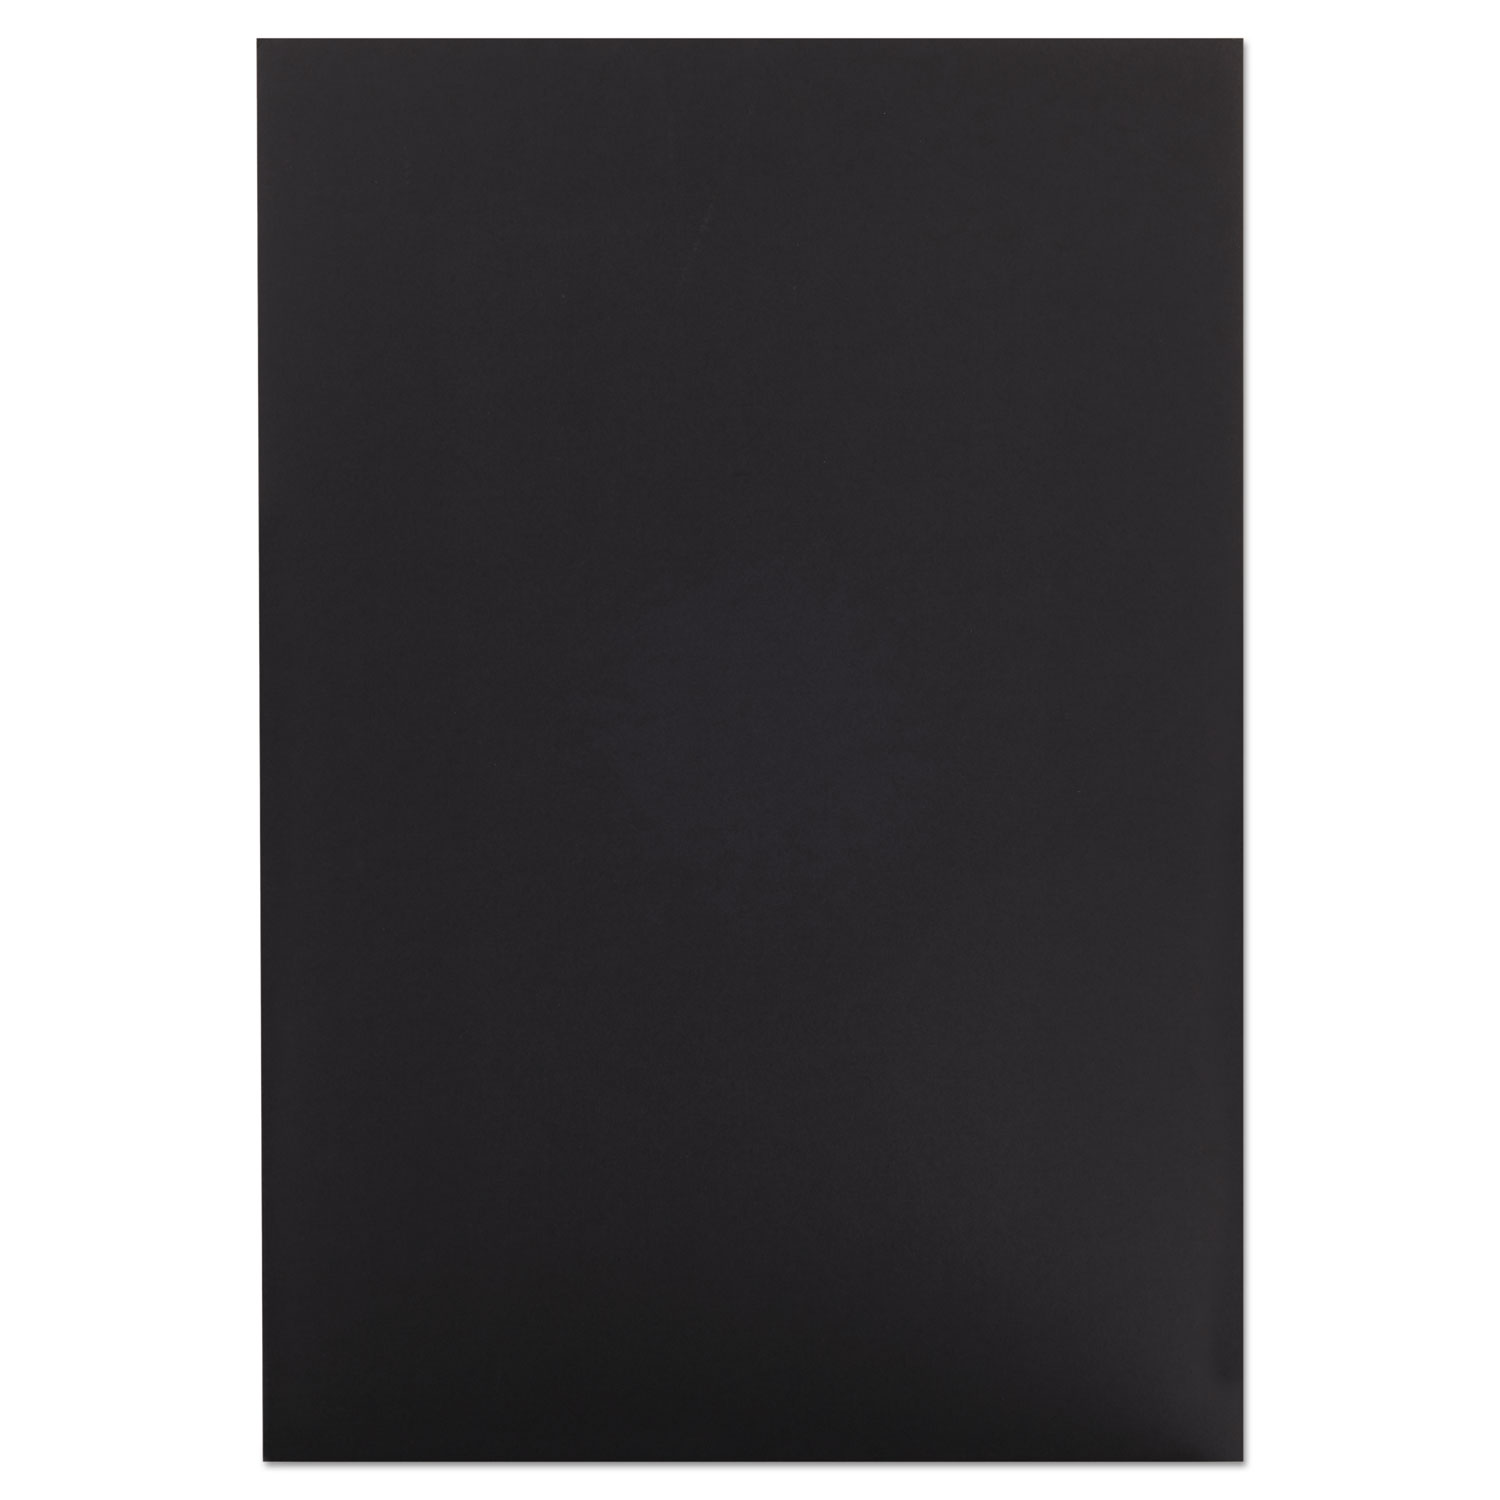  Elmer's 951120 CFC-Free Polystyrene Foam Board, 20 x 30, Black Surface and Core, 10/Carton (EPI951120) 